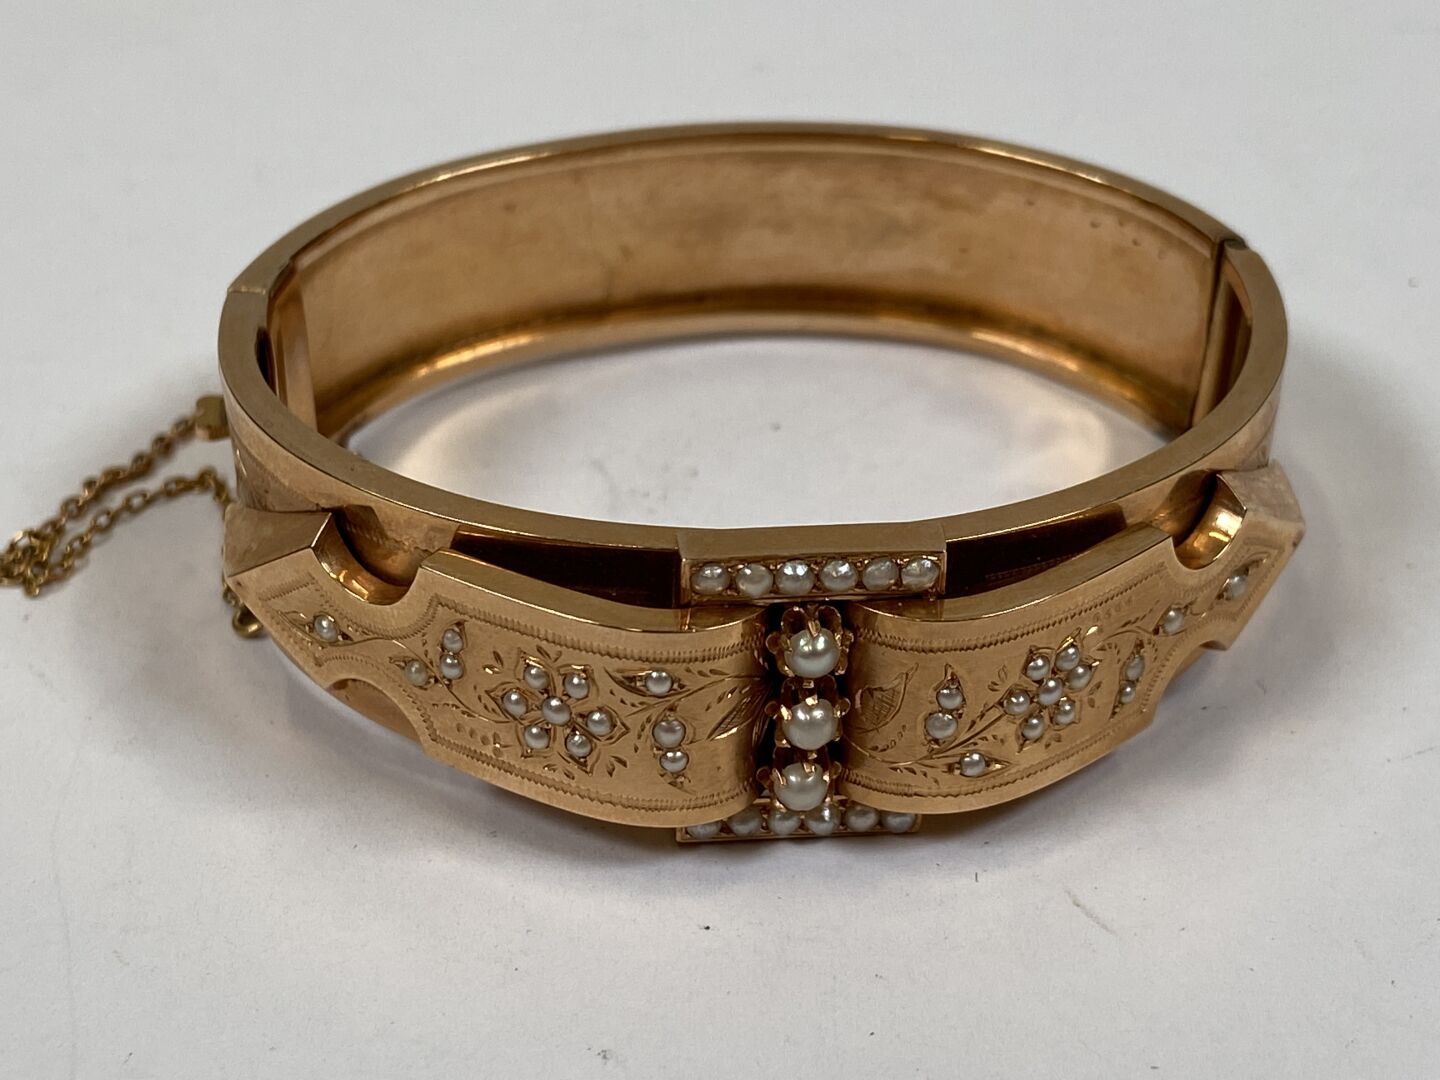 Null 大型18K黄金手镯，小珍珠镶嵌在封闭式和爪式镶嵌中，装饰有风格化的花朵和叶子的楣形图案。带安全链。

19世纪末，20世纪初。

毛重：19.6克。
&hellip;